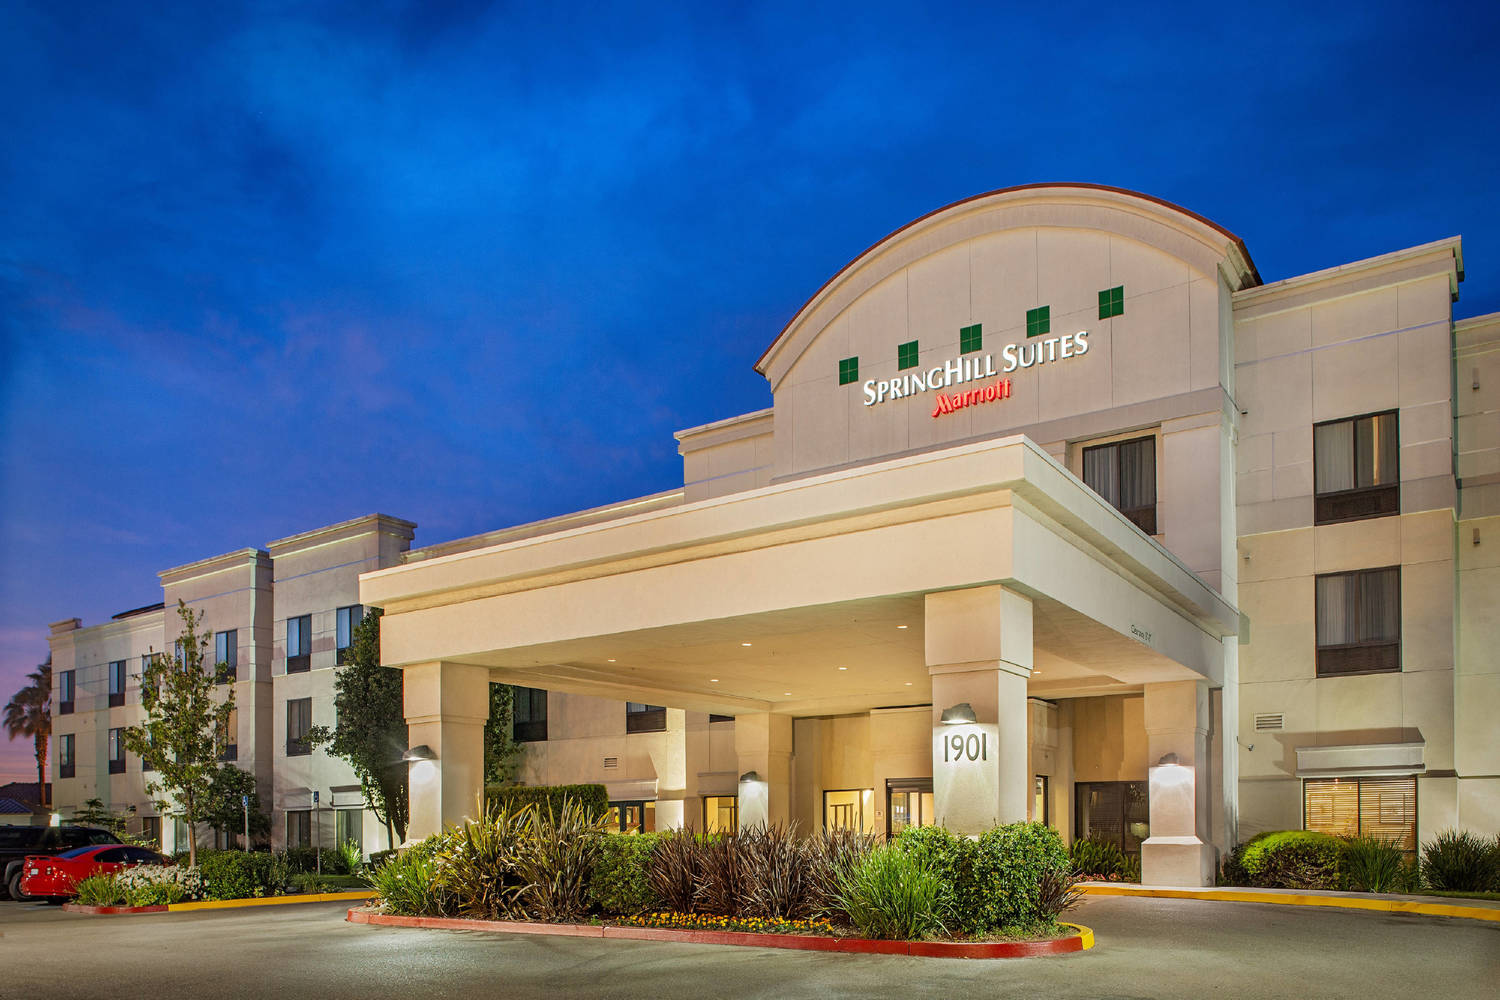 SpringHill Suites Marriott Modesto  Modesto  Jobs Hospitality